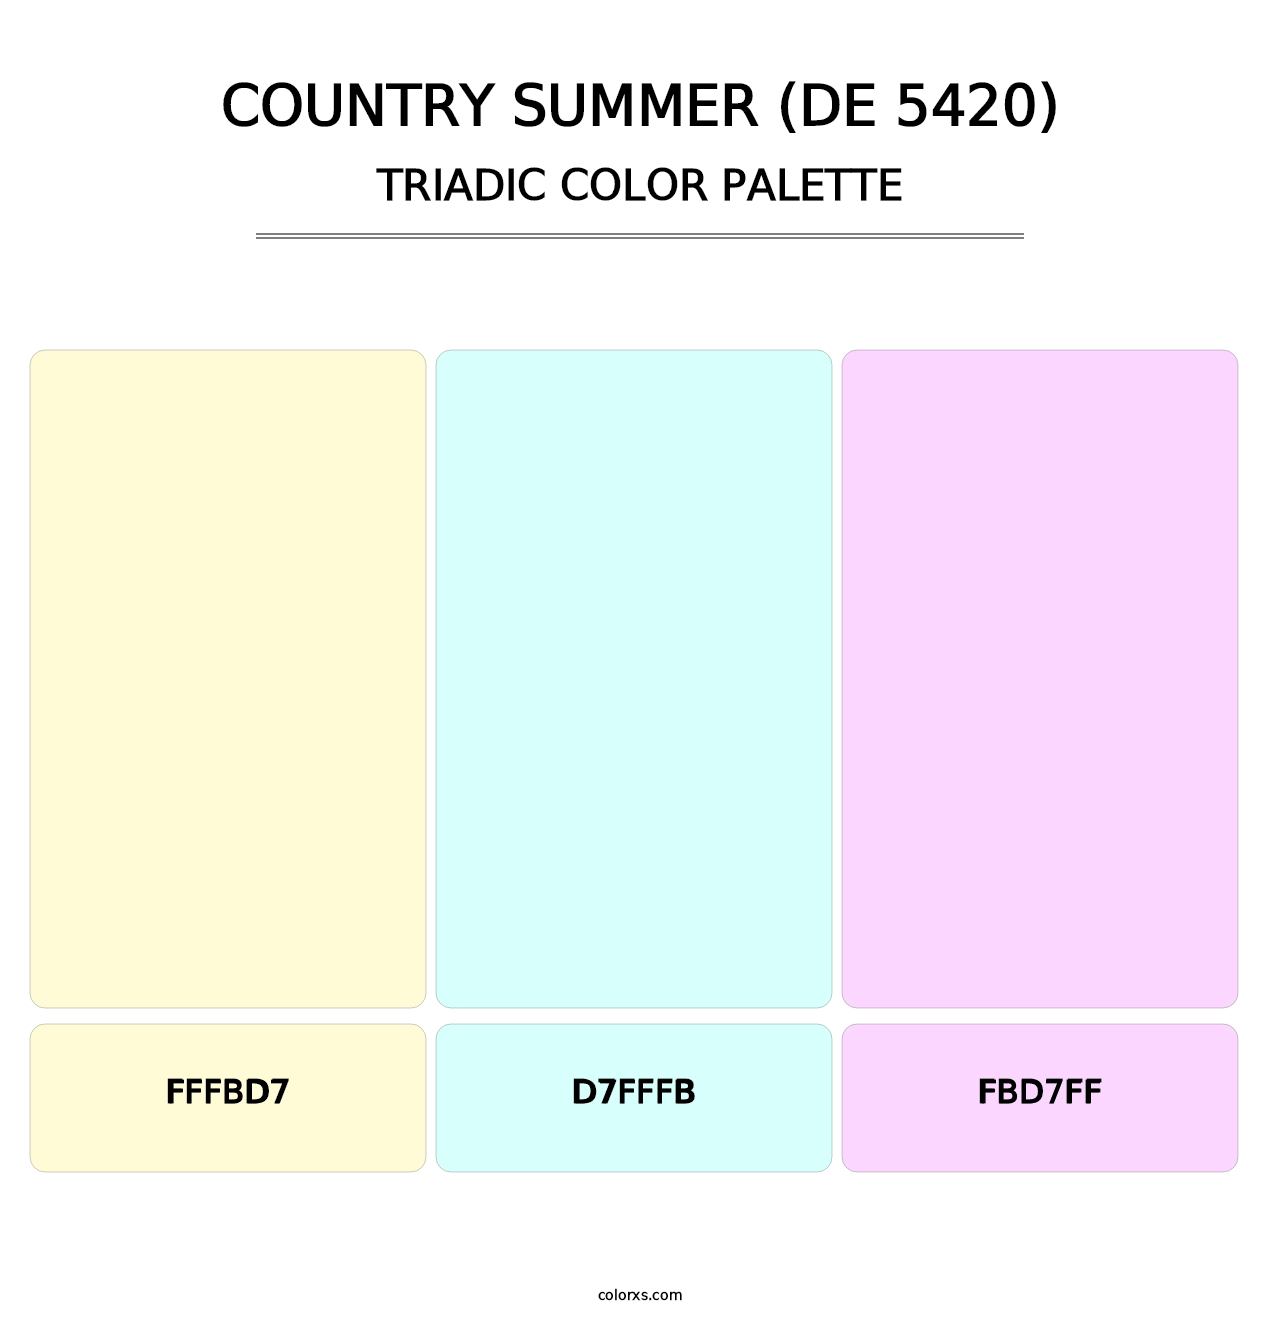 Country Summer (DE 5420) - Triadic Color Palette